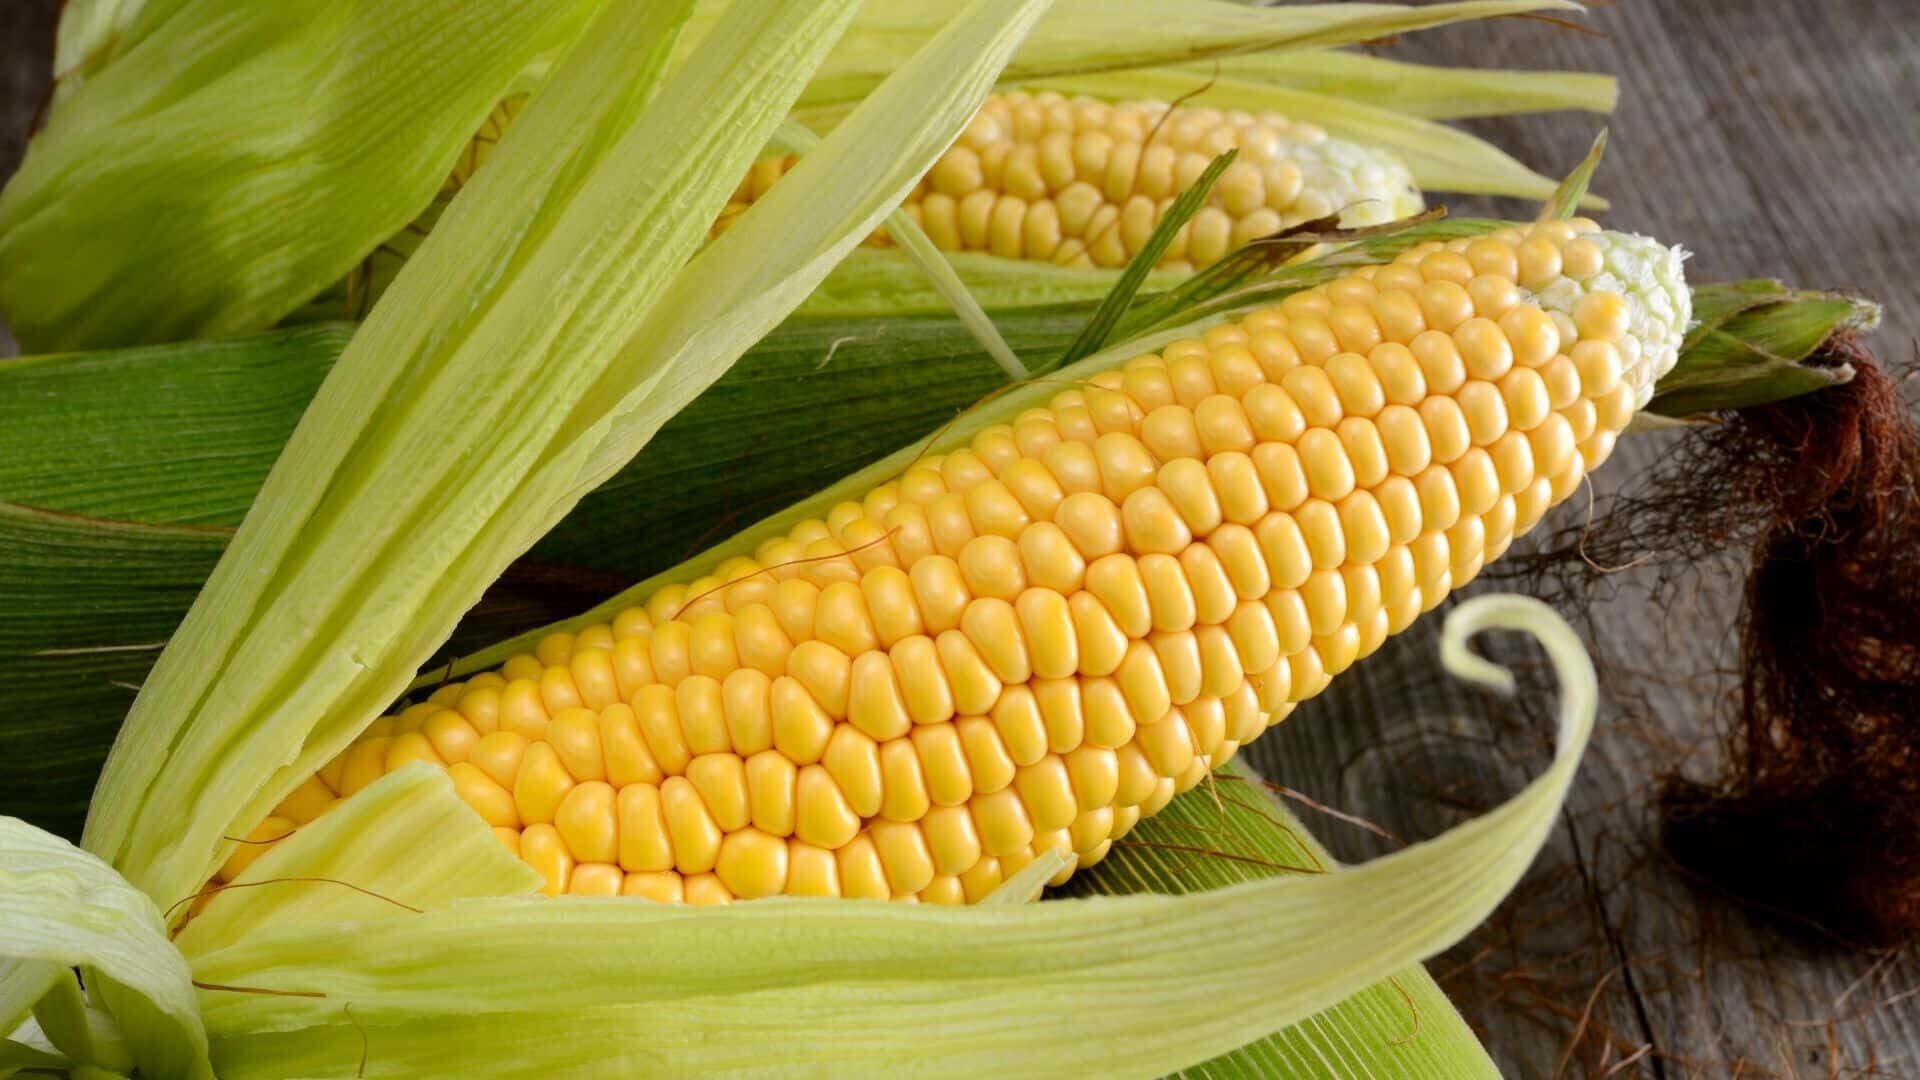 How to help my dog pass a corn cob?